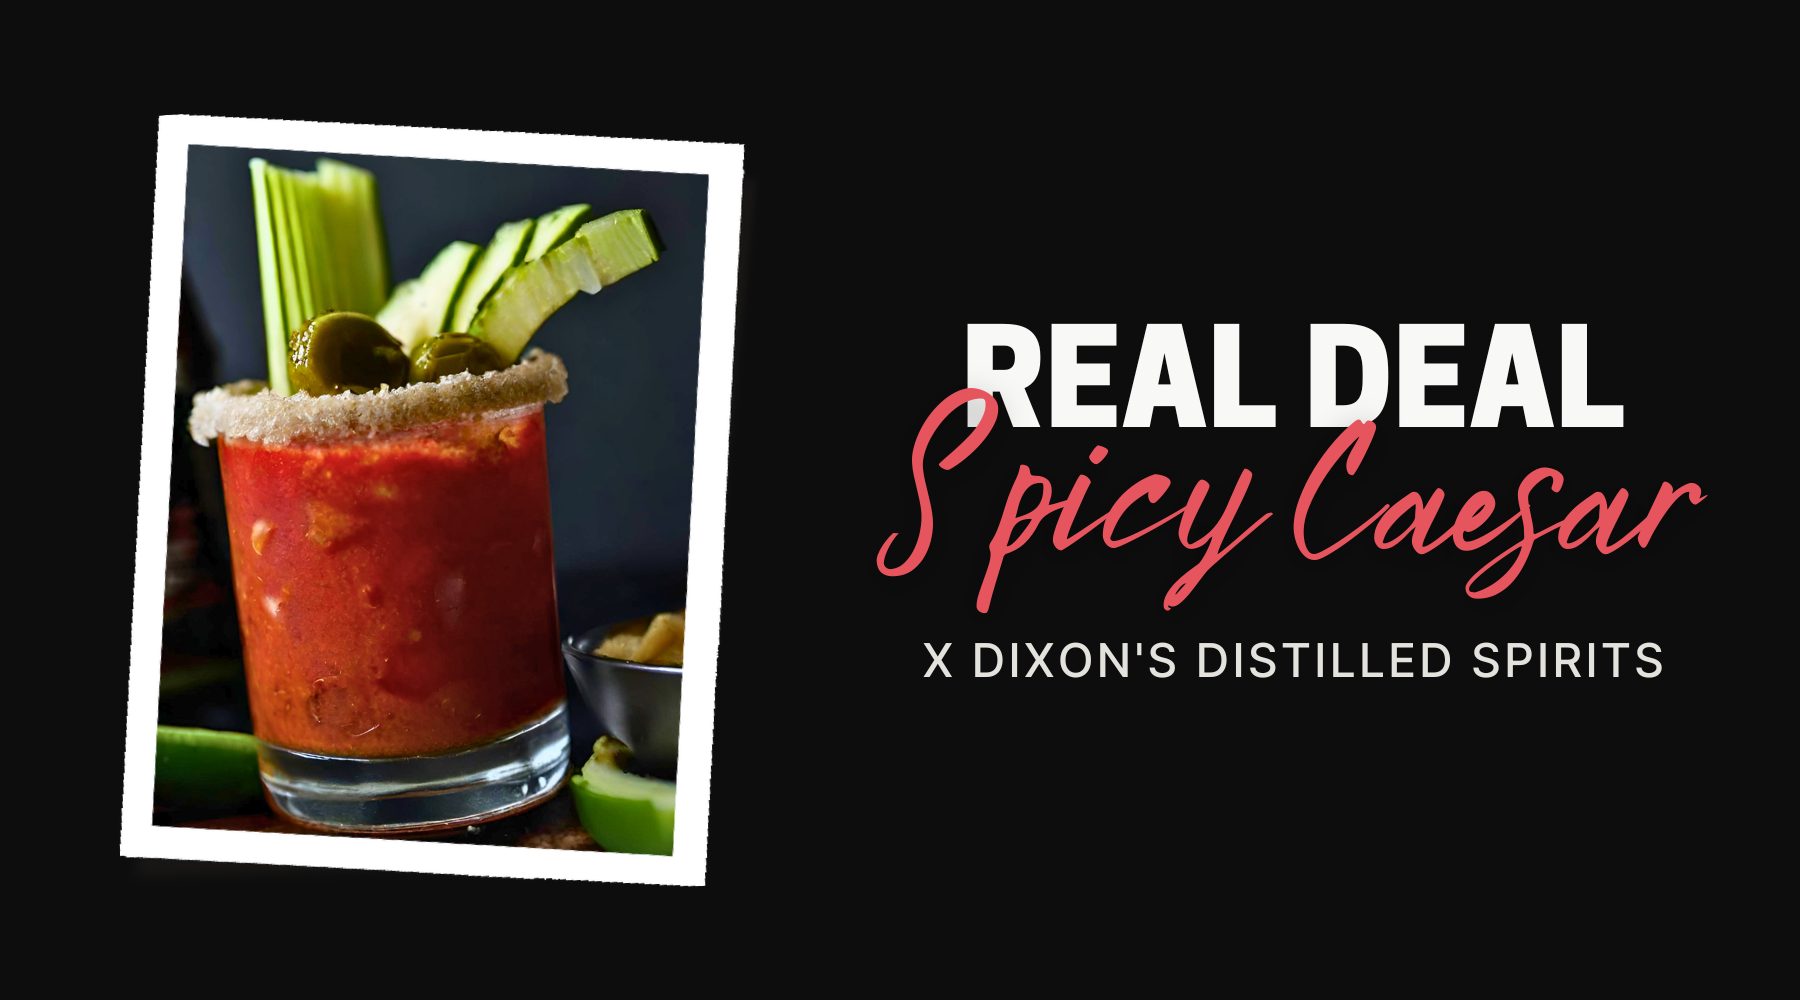 spicy caesar recipe. dixon's distilled spirits. cocktail recipe. spicy dill pickle hot sauce